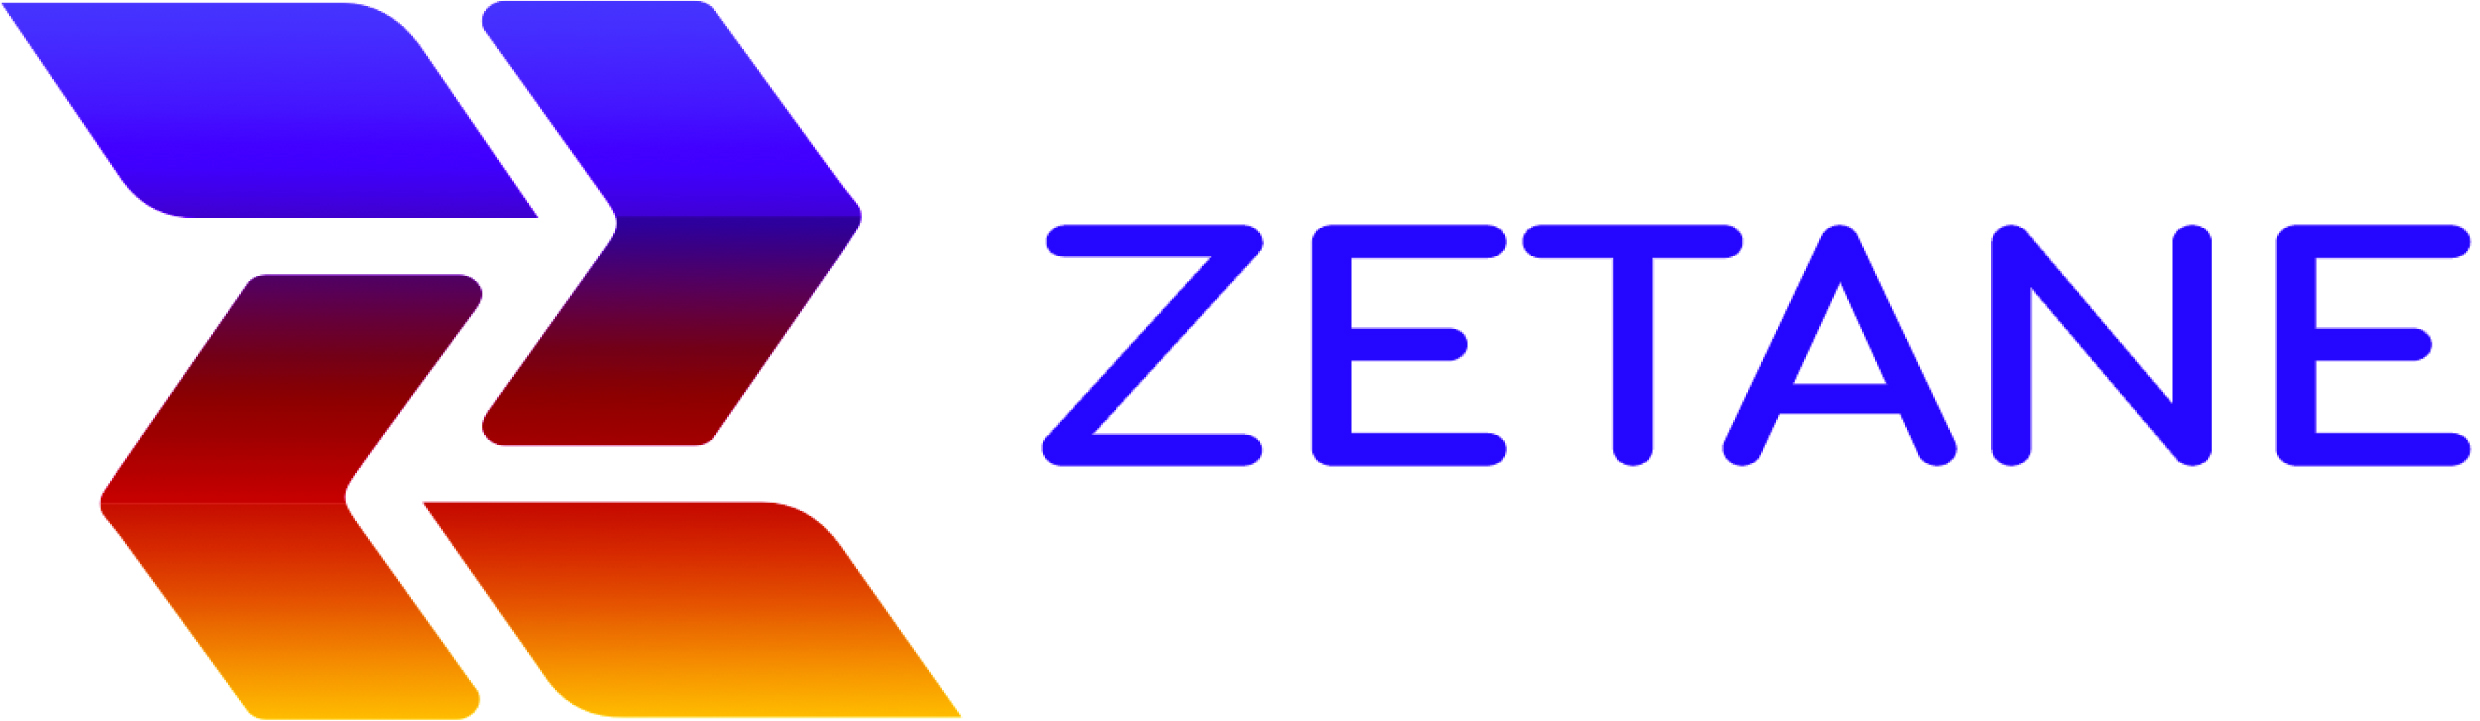 Zetane_logo_for_white_background (2) copy